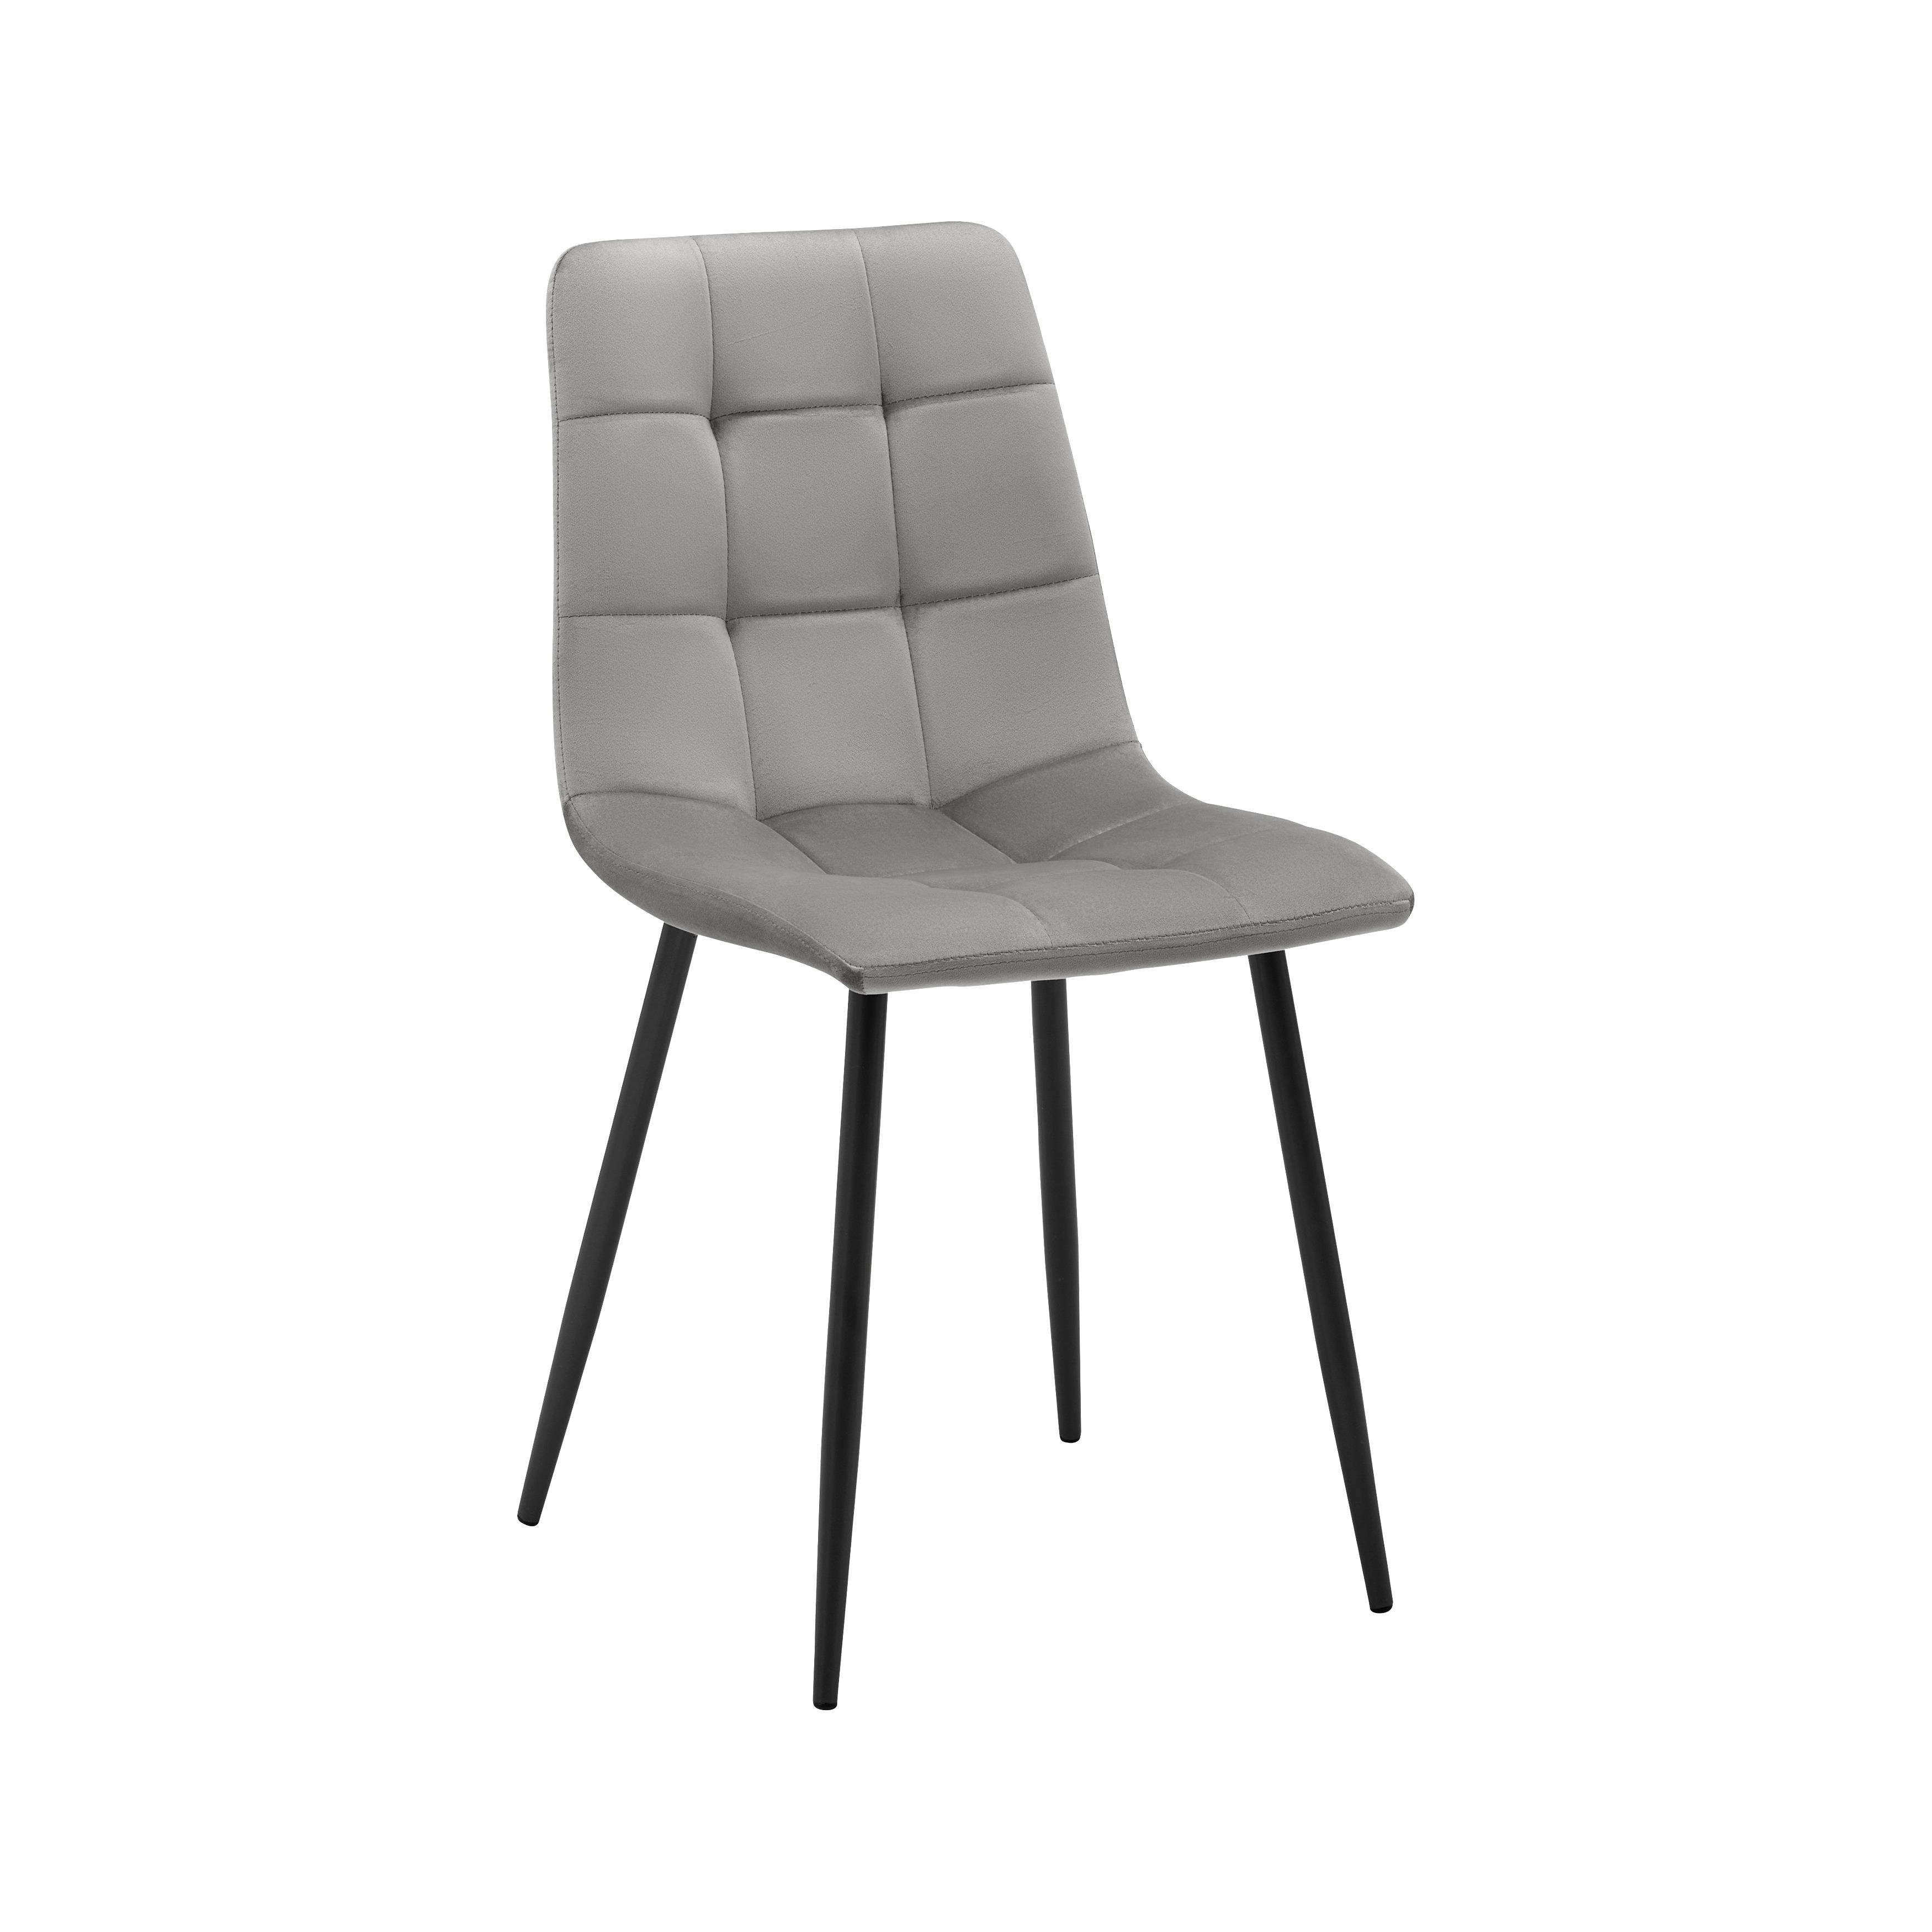 Stuhl "Ria", Samtbezug, grau, Gepolster - Schwarz/Grau, MODERN, Textil/Metall (43,5/87/54cm) - Bessagi Home